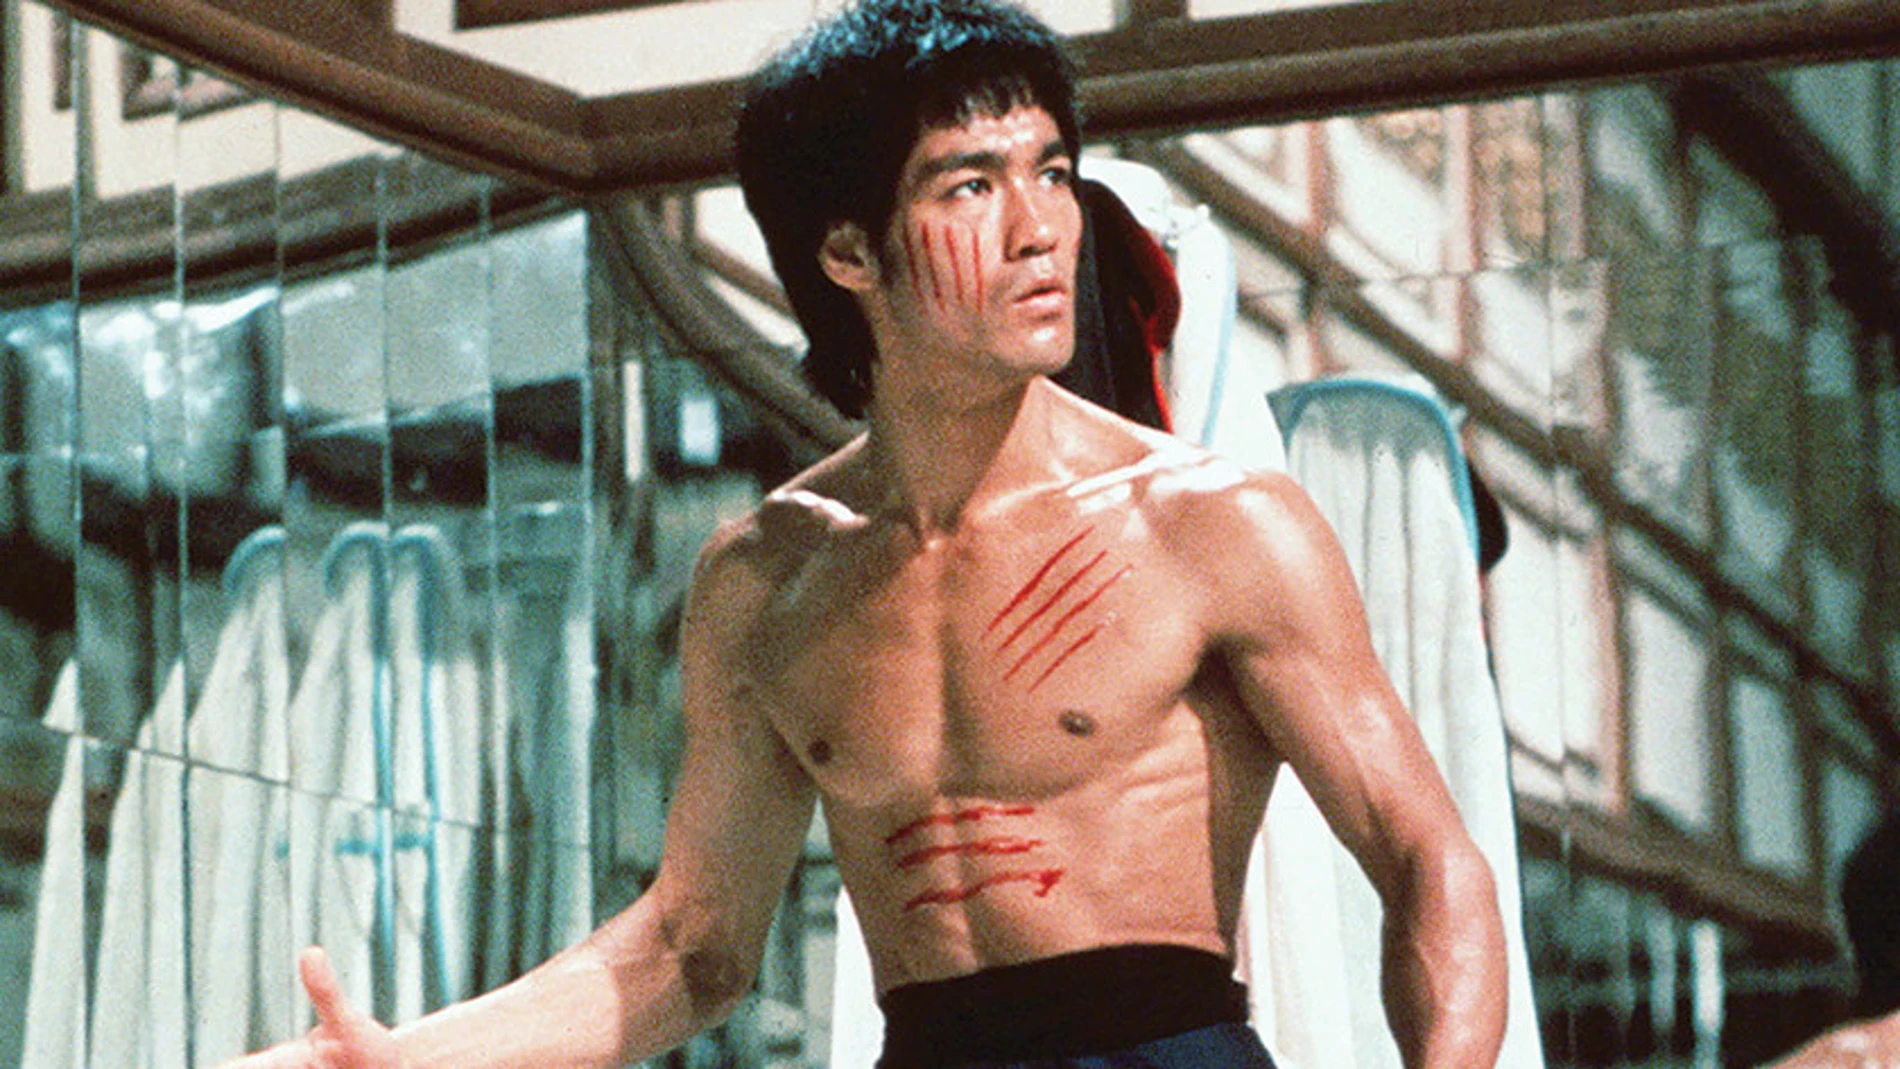 El consumo excesivo de agua mató a Bruce Lee, según un estudio